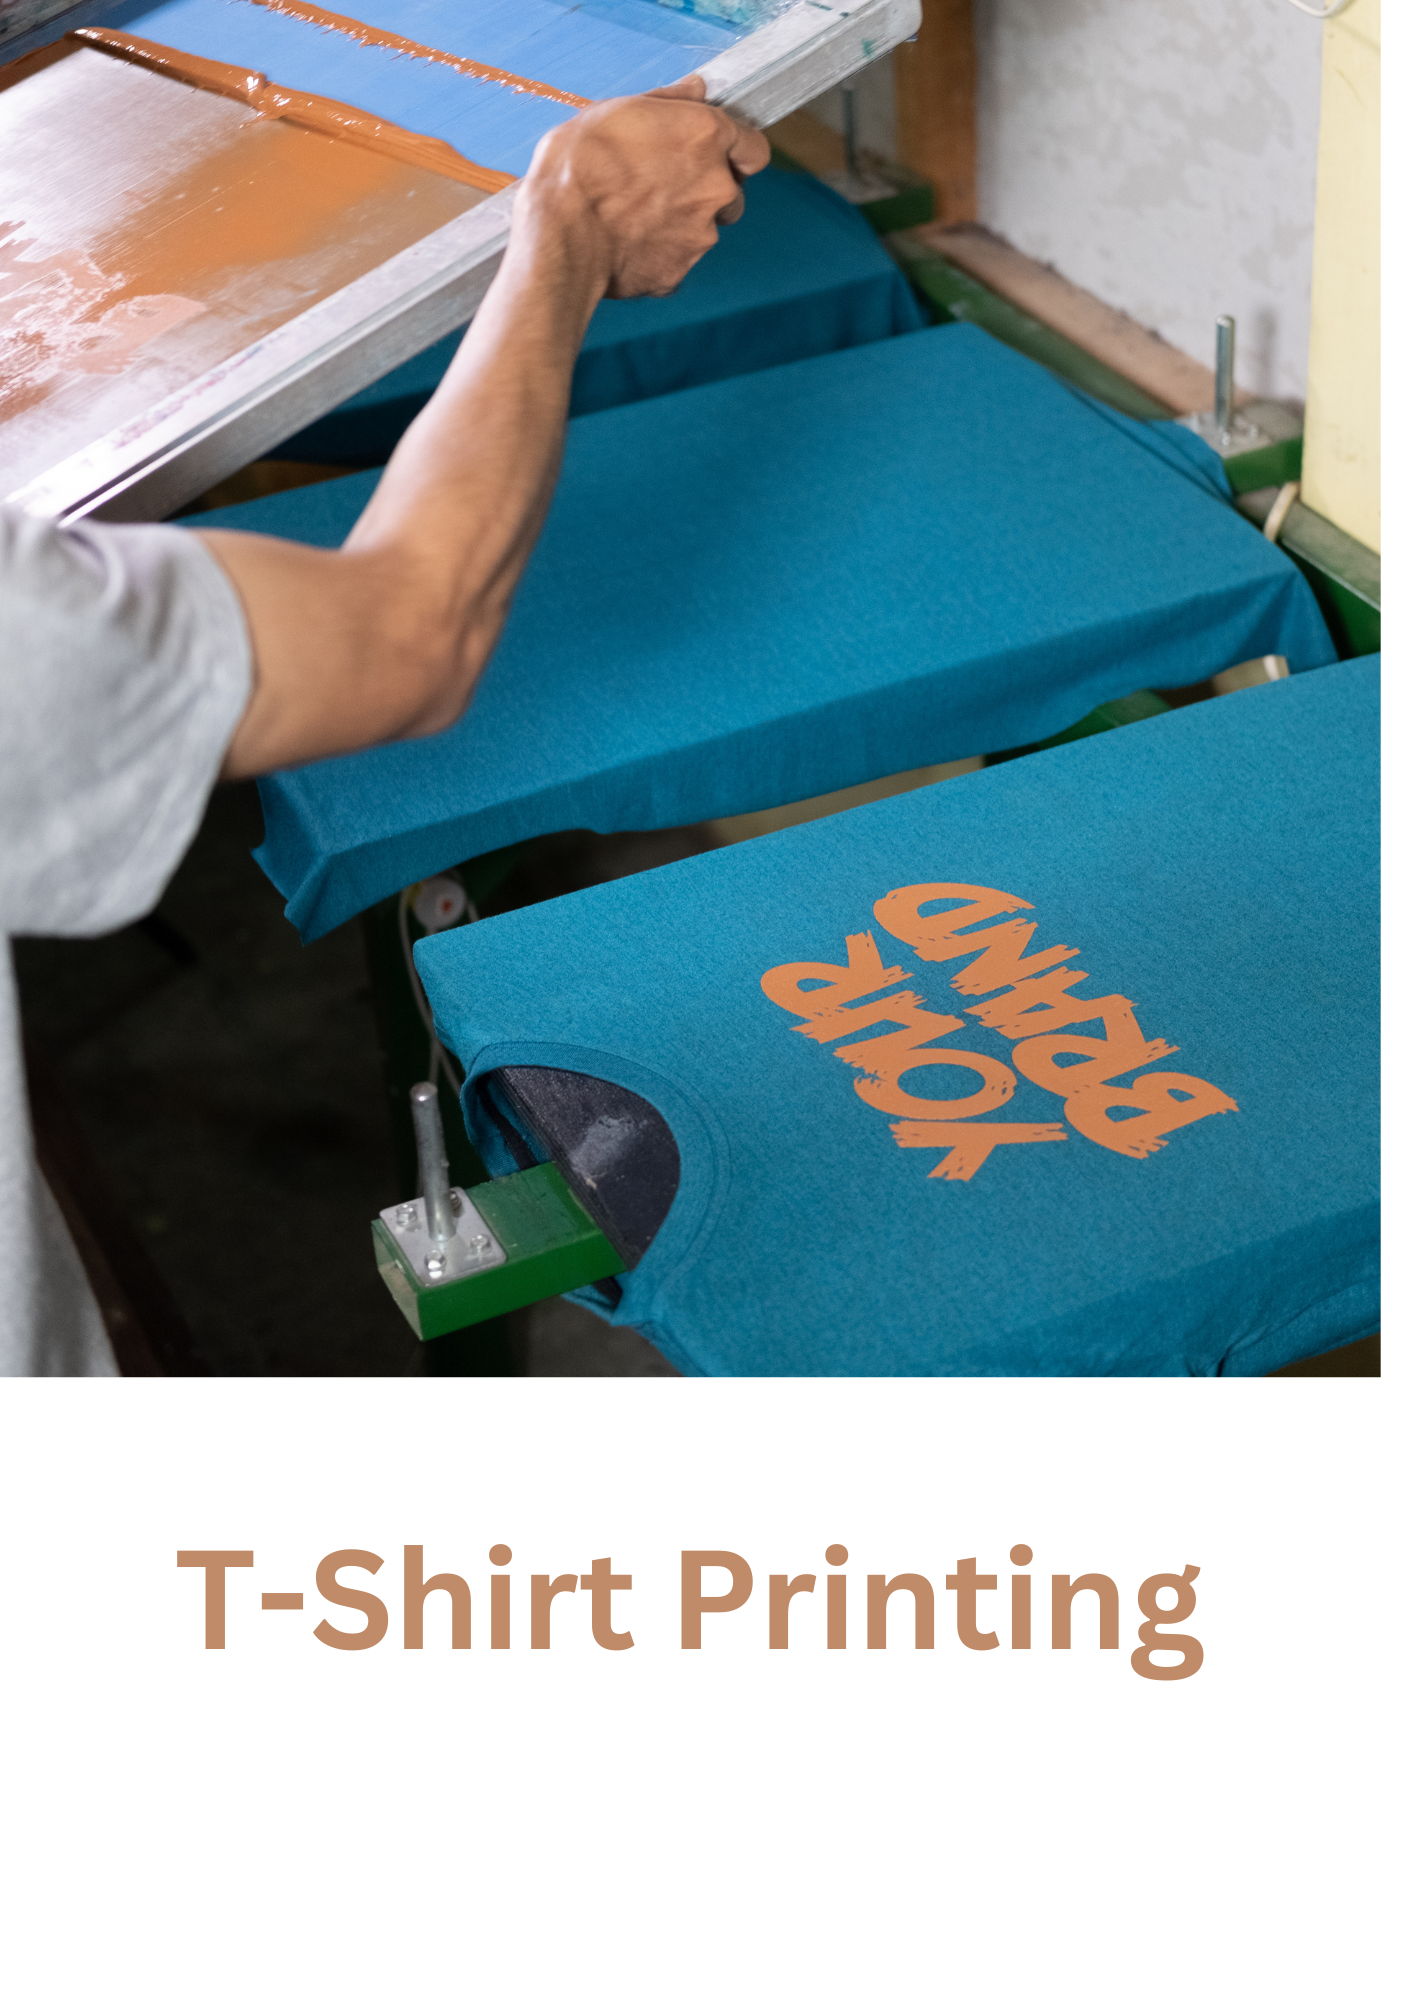 t-shirt printing methods - screen printing, direct-to-garment printing